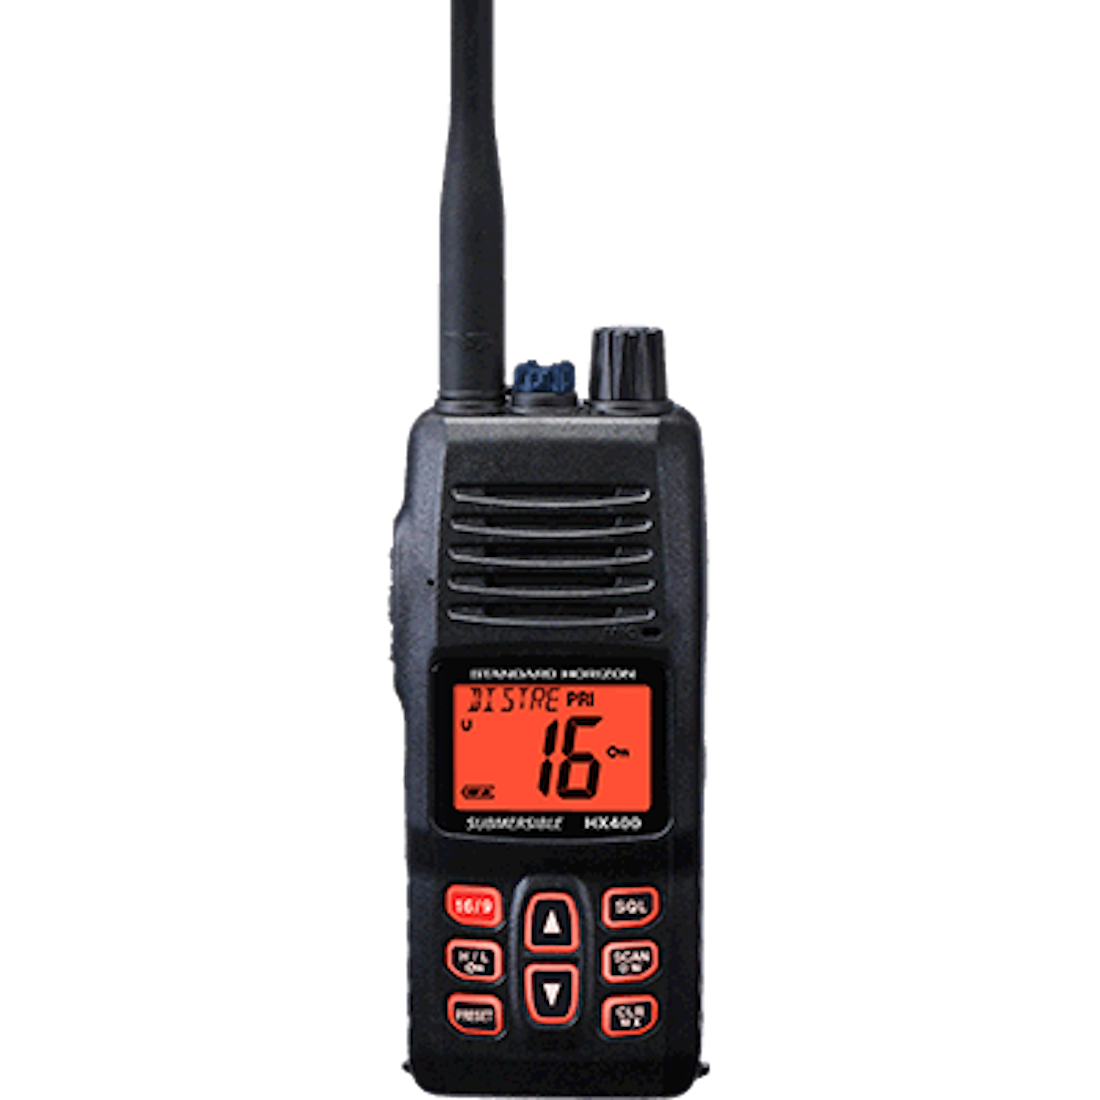 Standard Horizon HX400IS Handheld VHF - Intrinsically Safe [HX400IS]